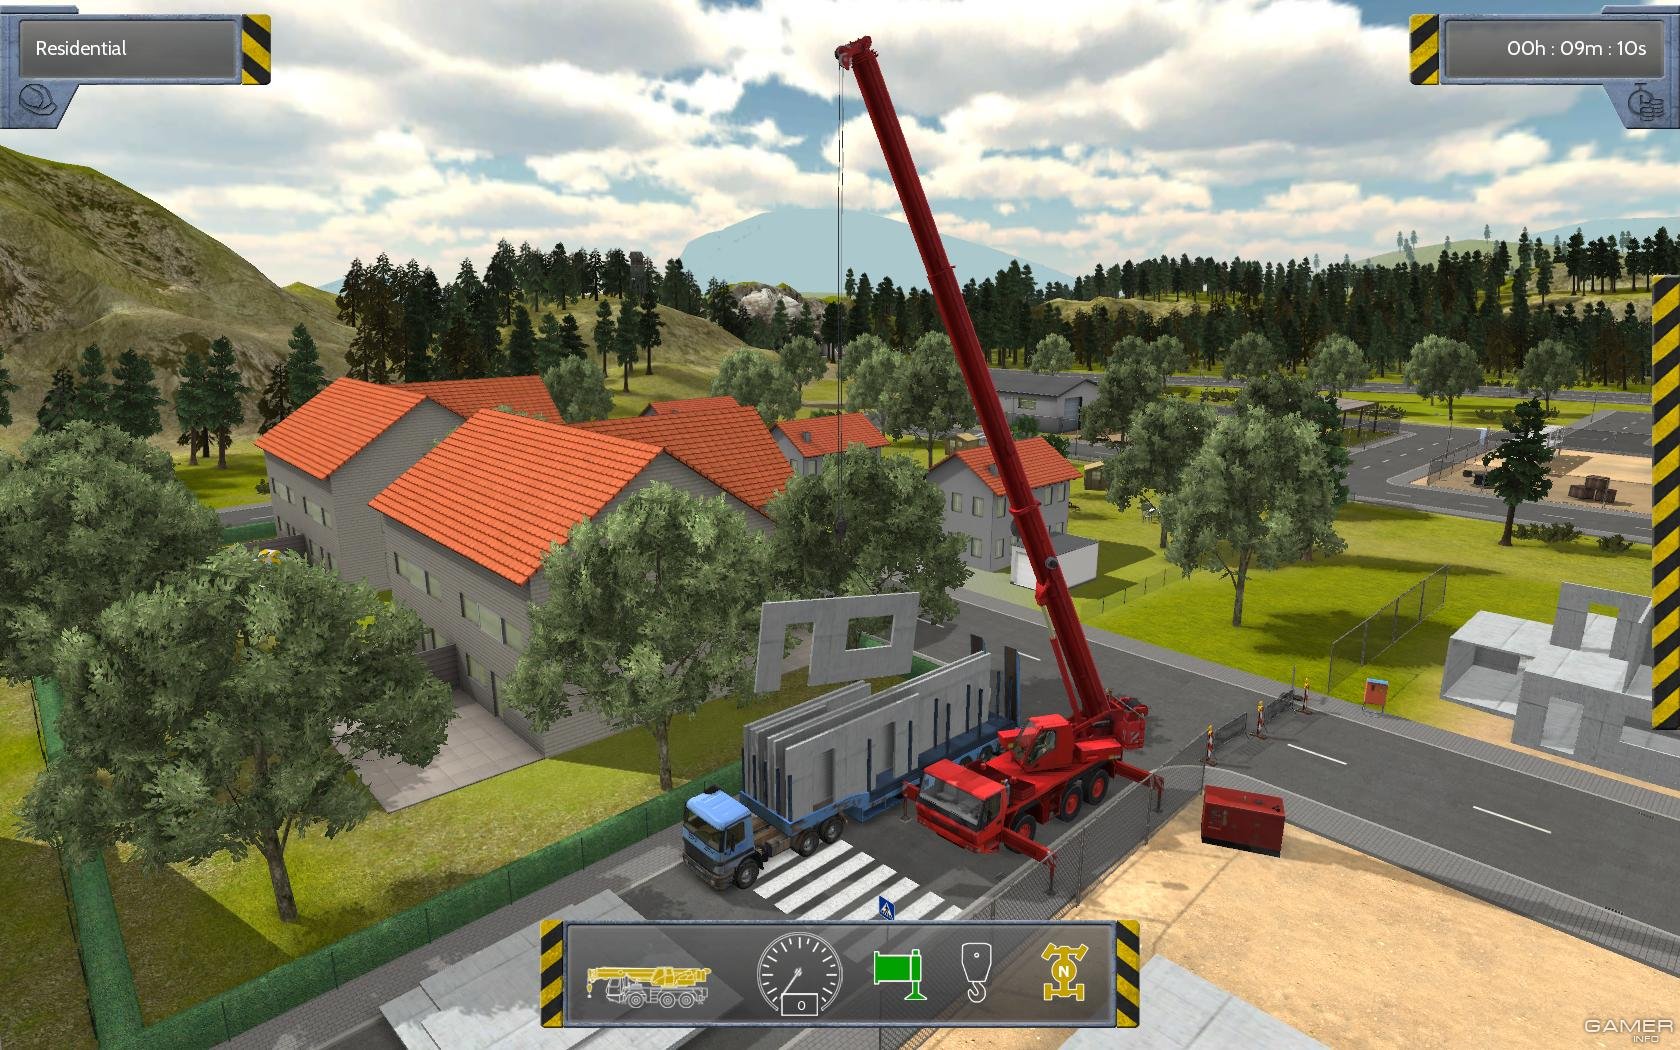 construction simulator 2012 free download full version pc